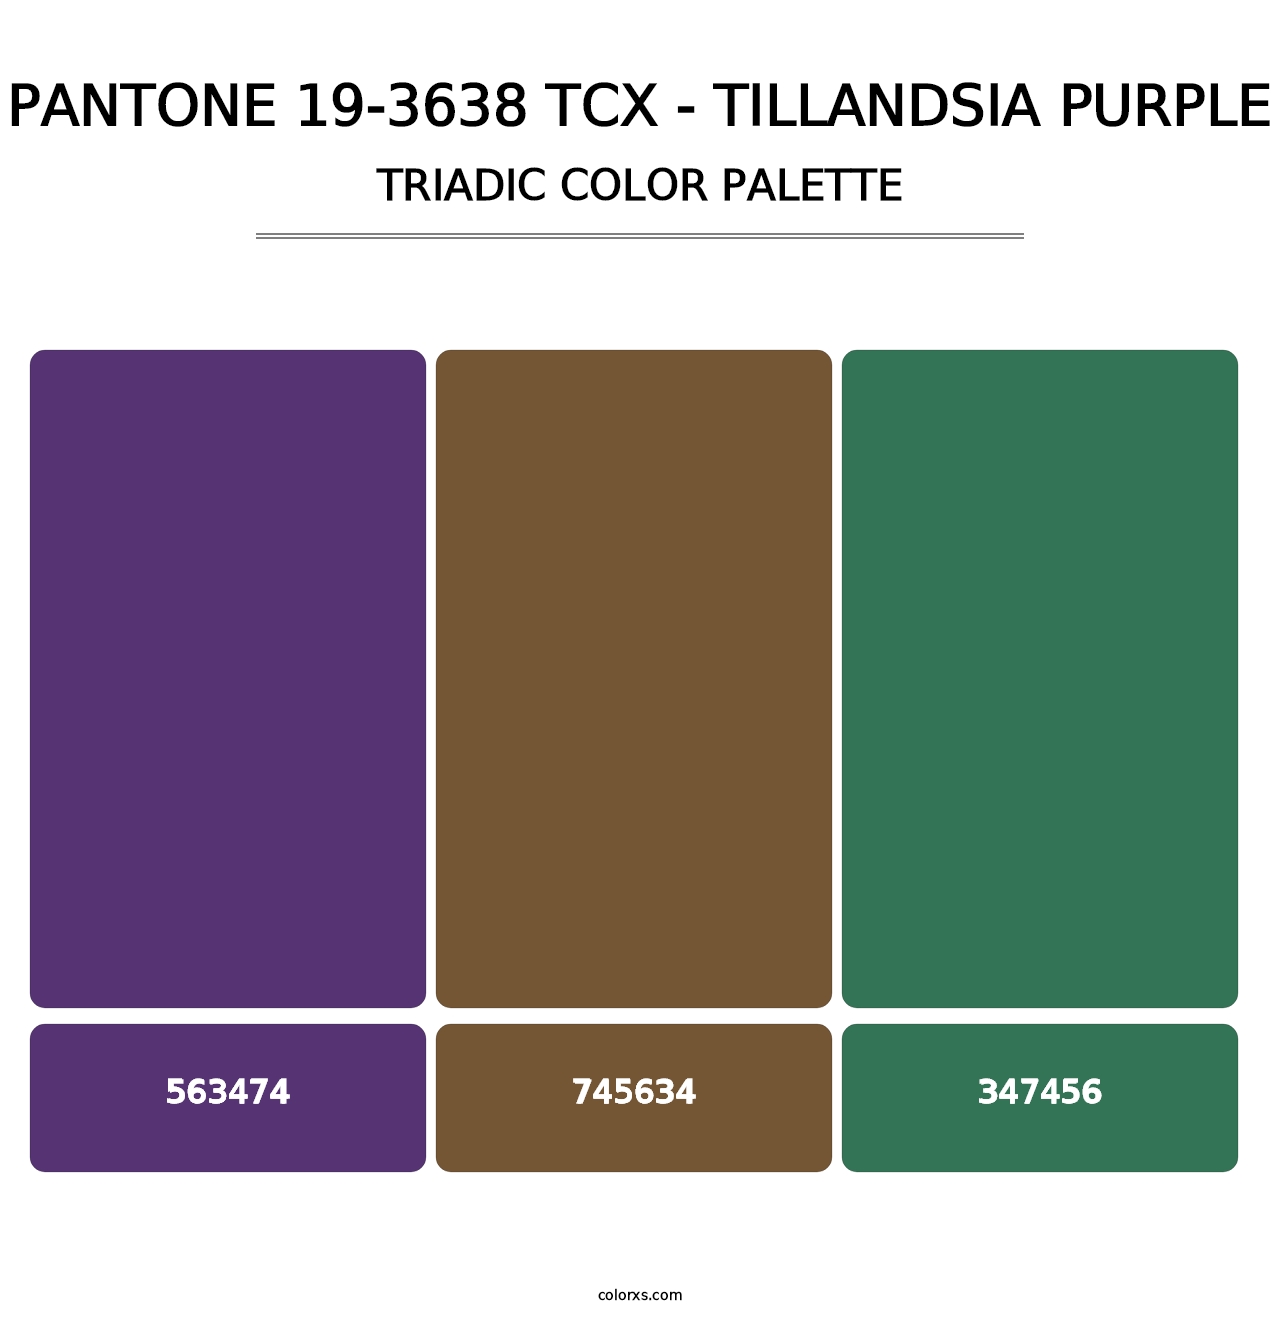 PANTONE 19-3638 TCX - Tillandsia Purple - Triadic Color Palette